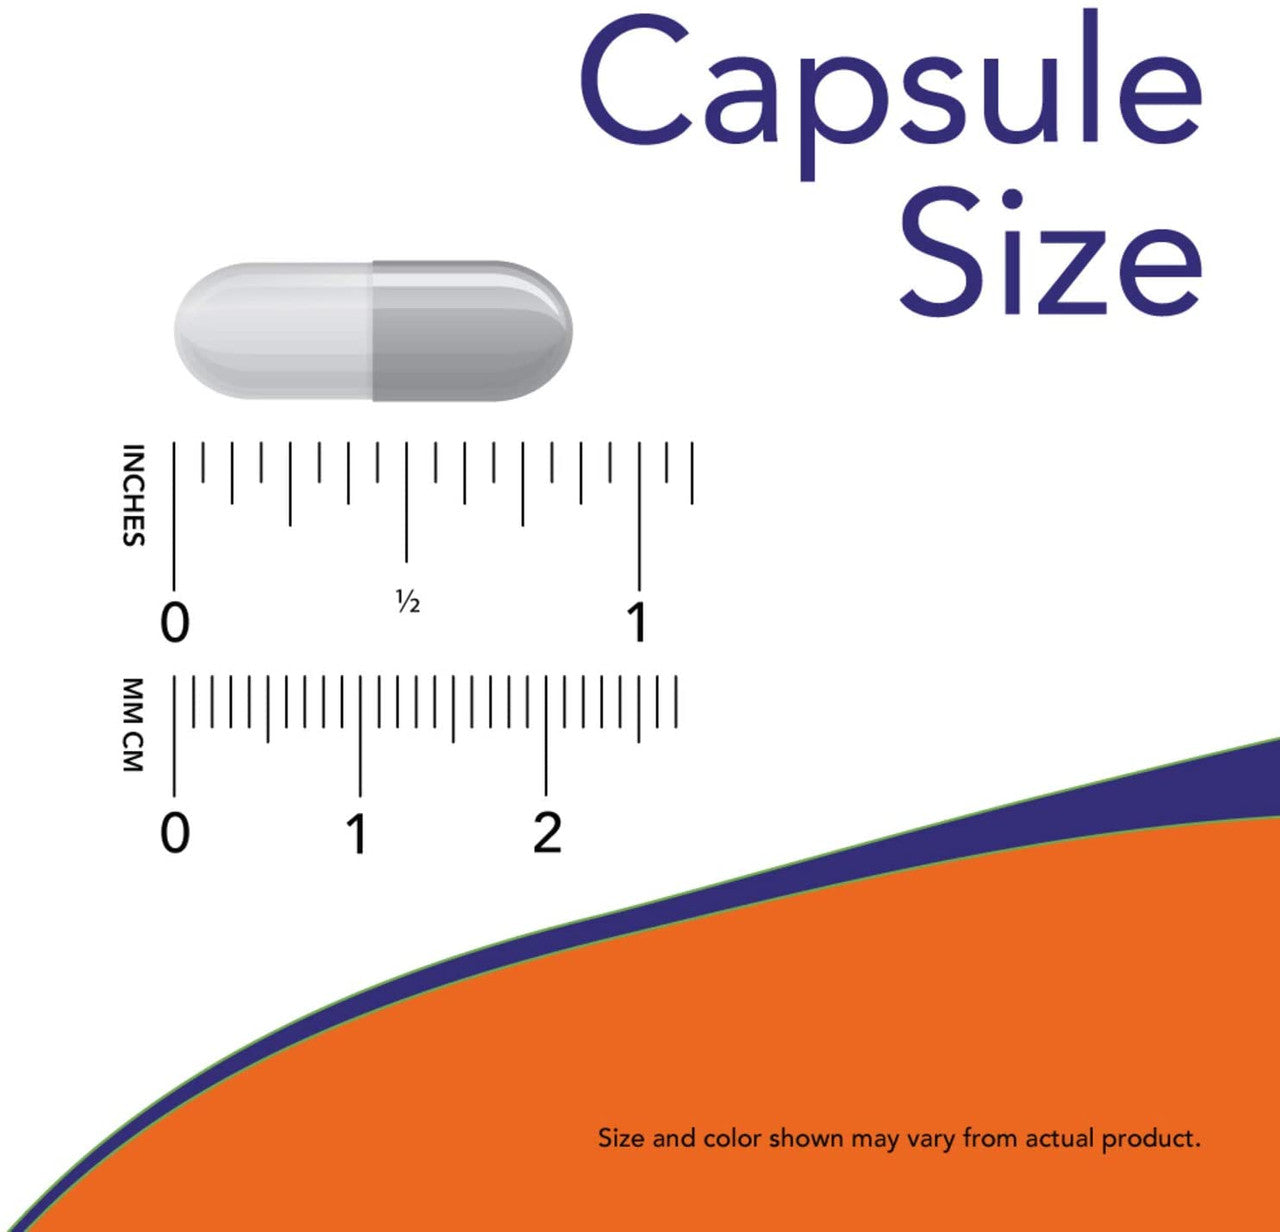 Now L-Phenylalanine 500 mg capsule size